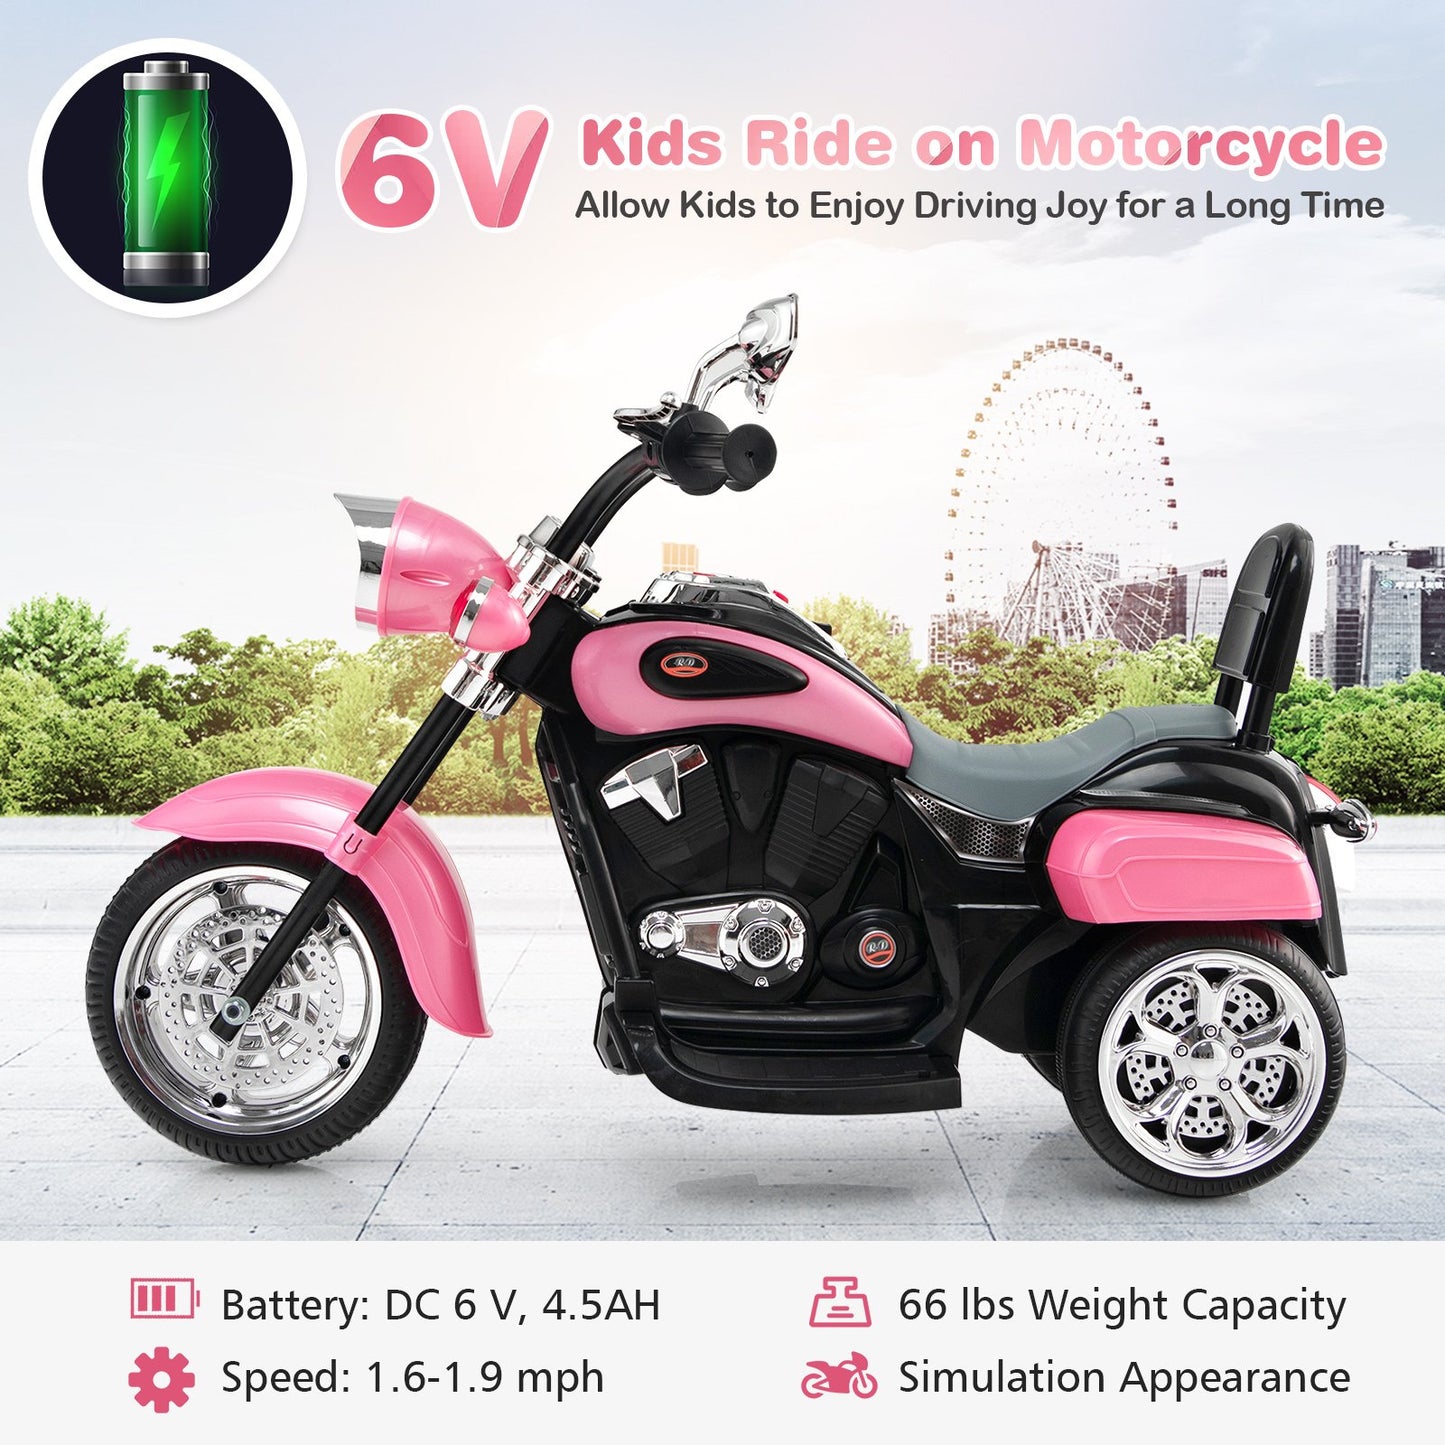 6V 3 Wheel Kids Motorcycle, Pink - Gallery Canada